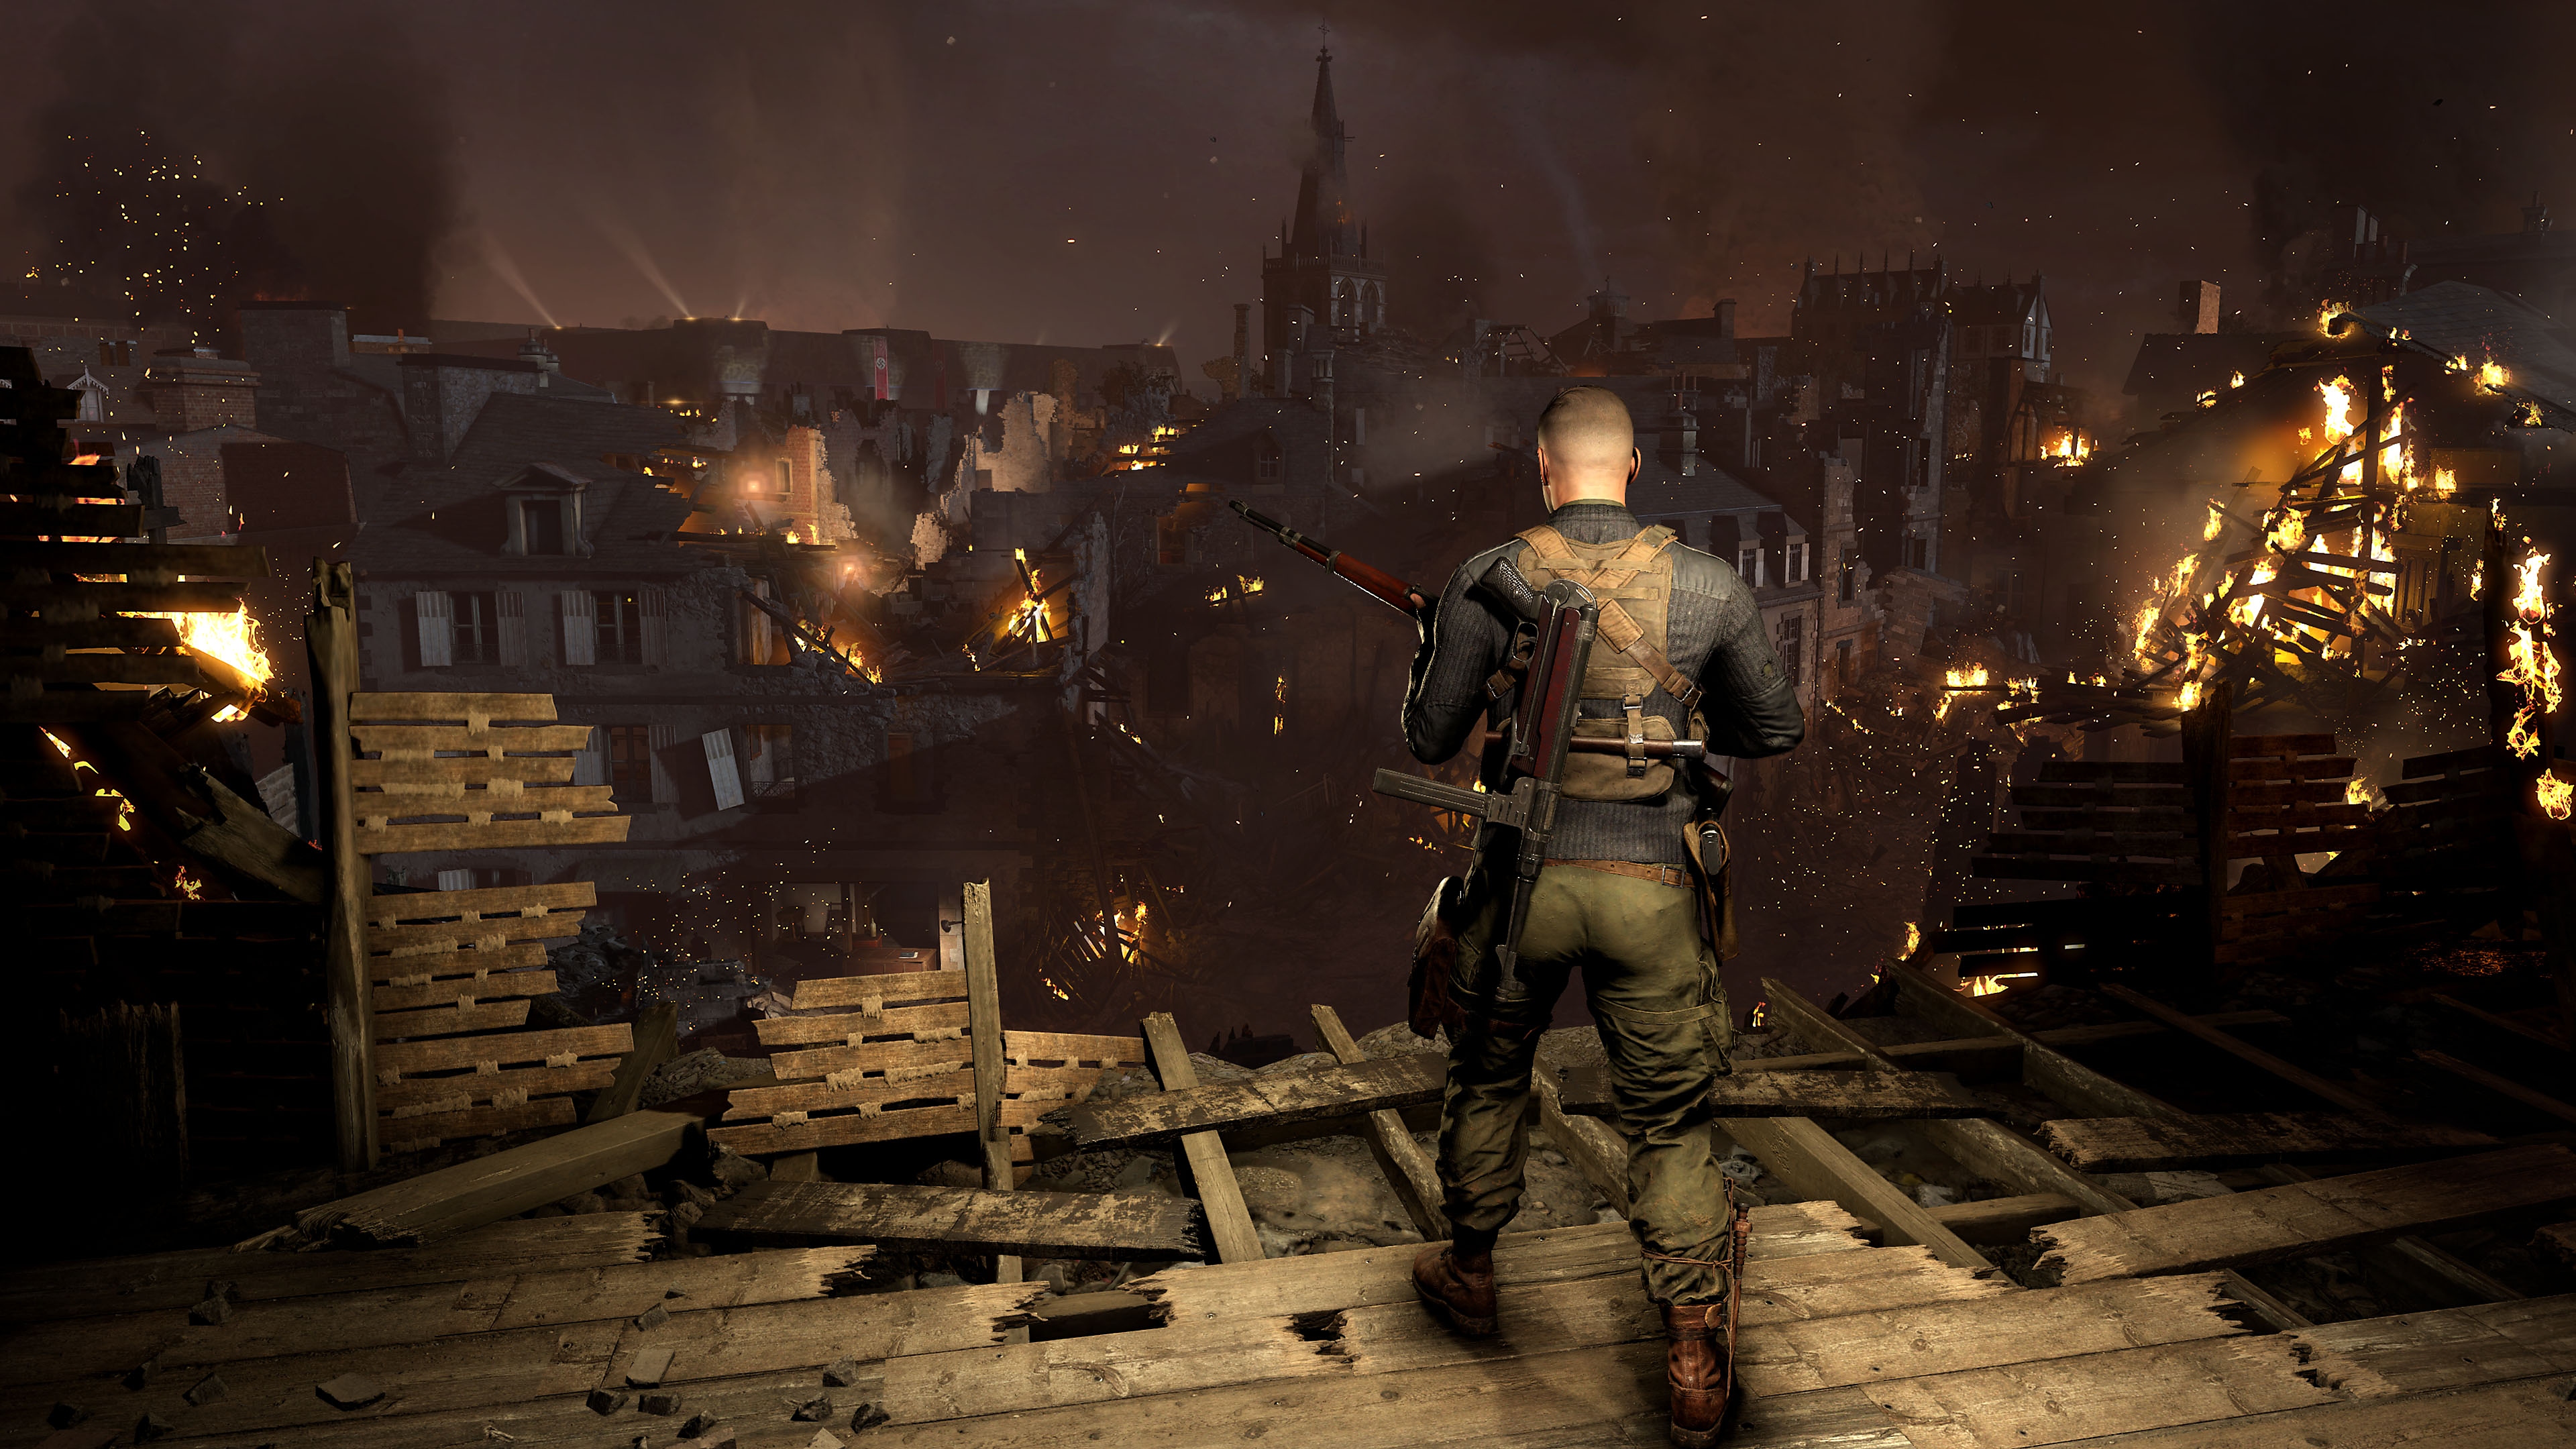 『Sniper Elite 5』 燃える建物がある町を見渡すキャラクターのスクリーンショット